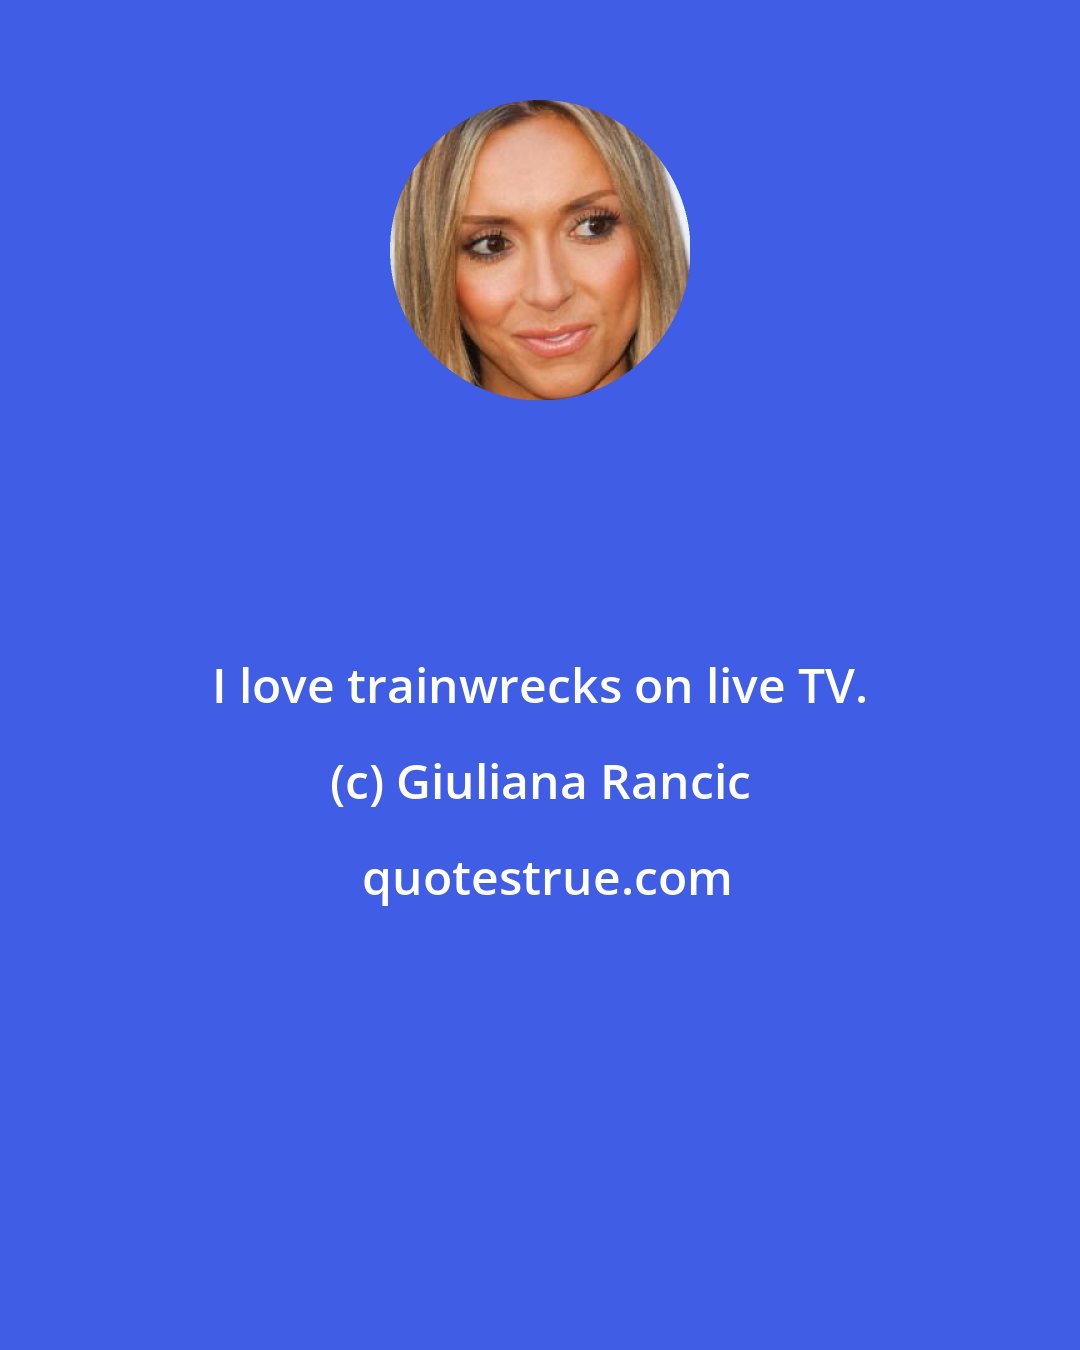 Giuliana Rancic: I love trainwrecks on live TV.